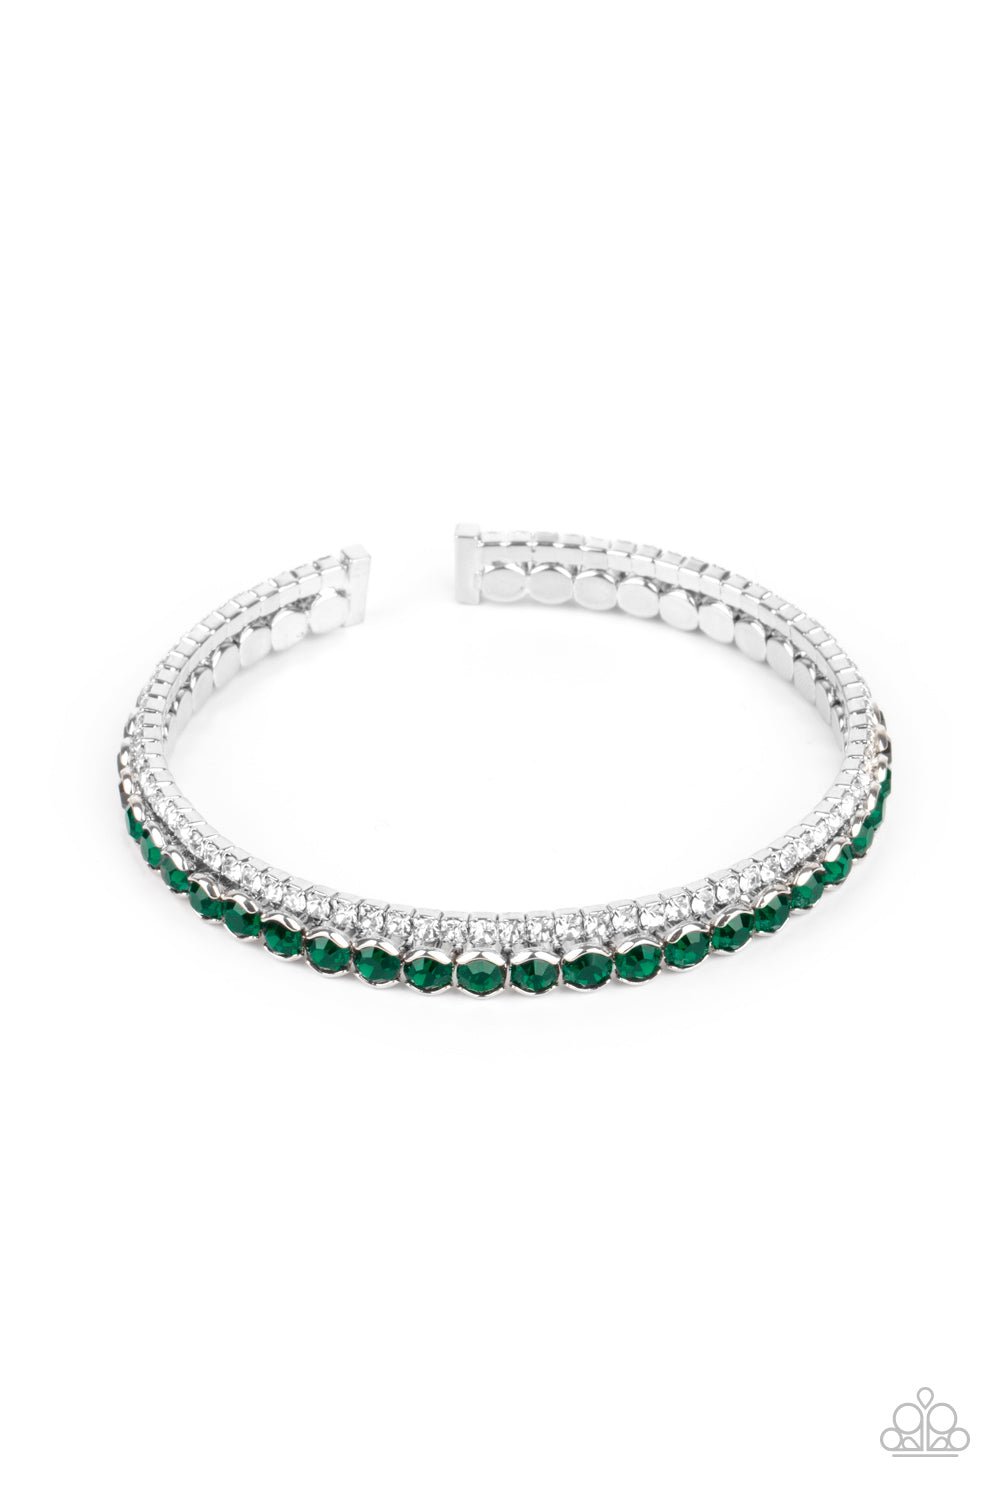 Fairytale Sparkle - Green Bracelet Paparazzi - 1441